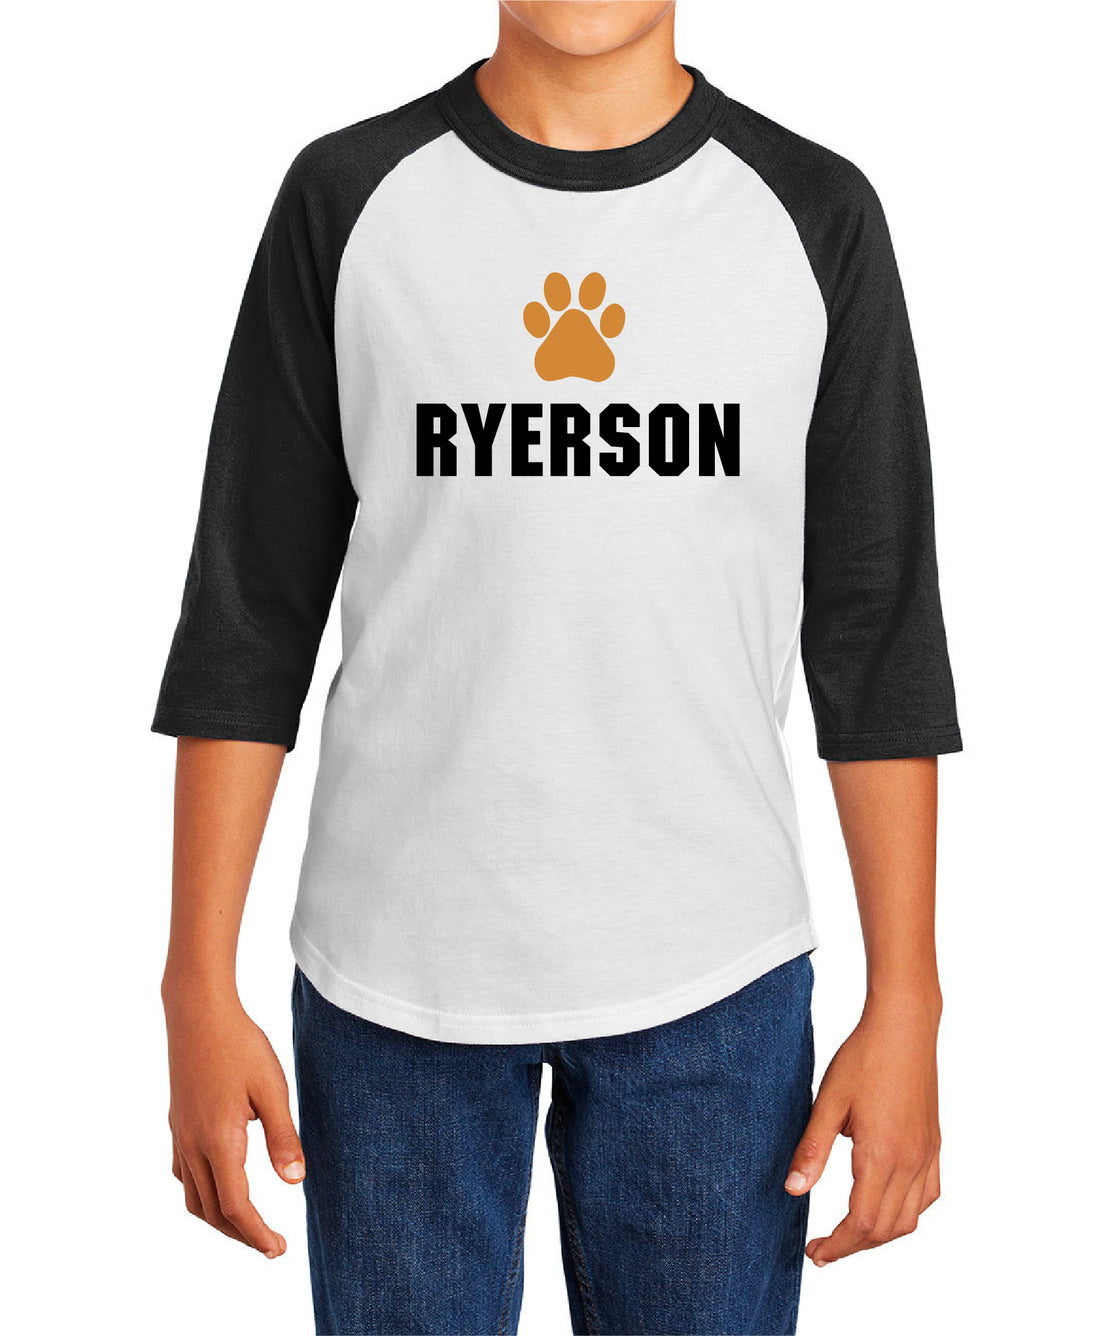 Ryerson - Youth Colorblock Raglan Jersey